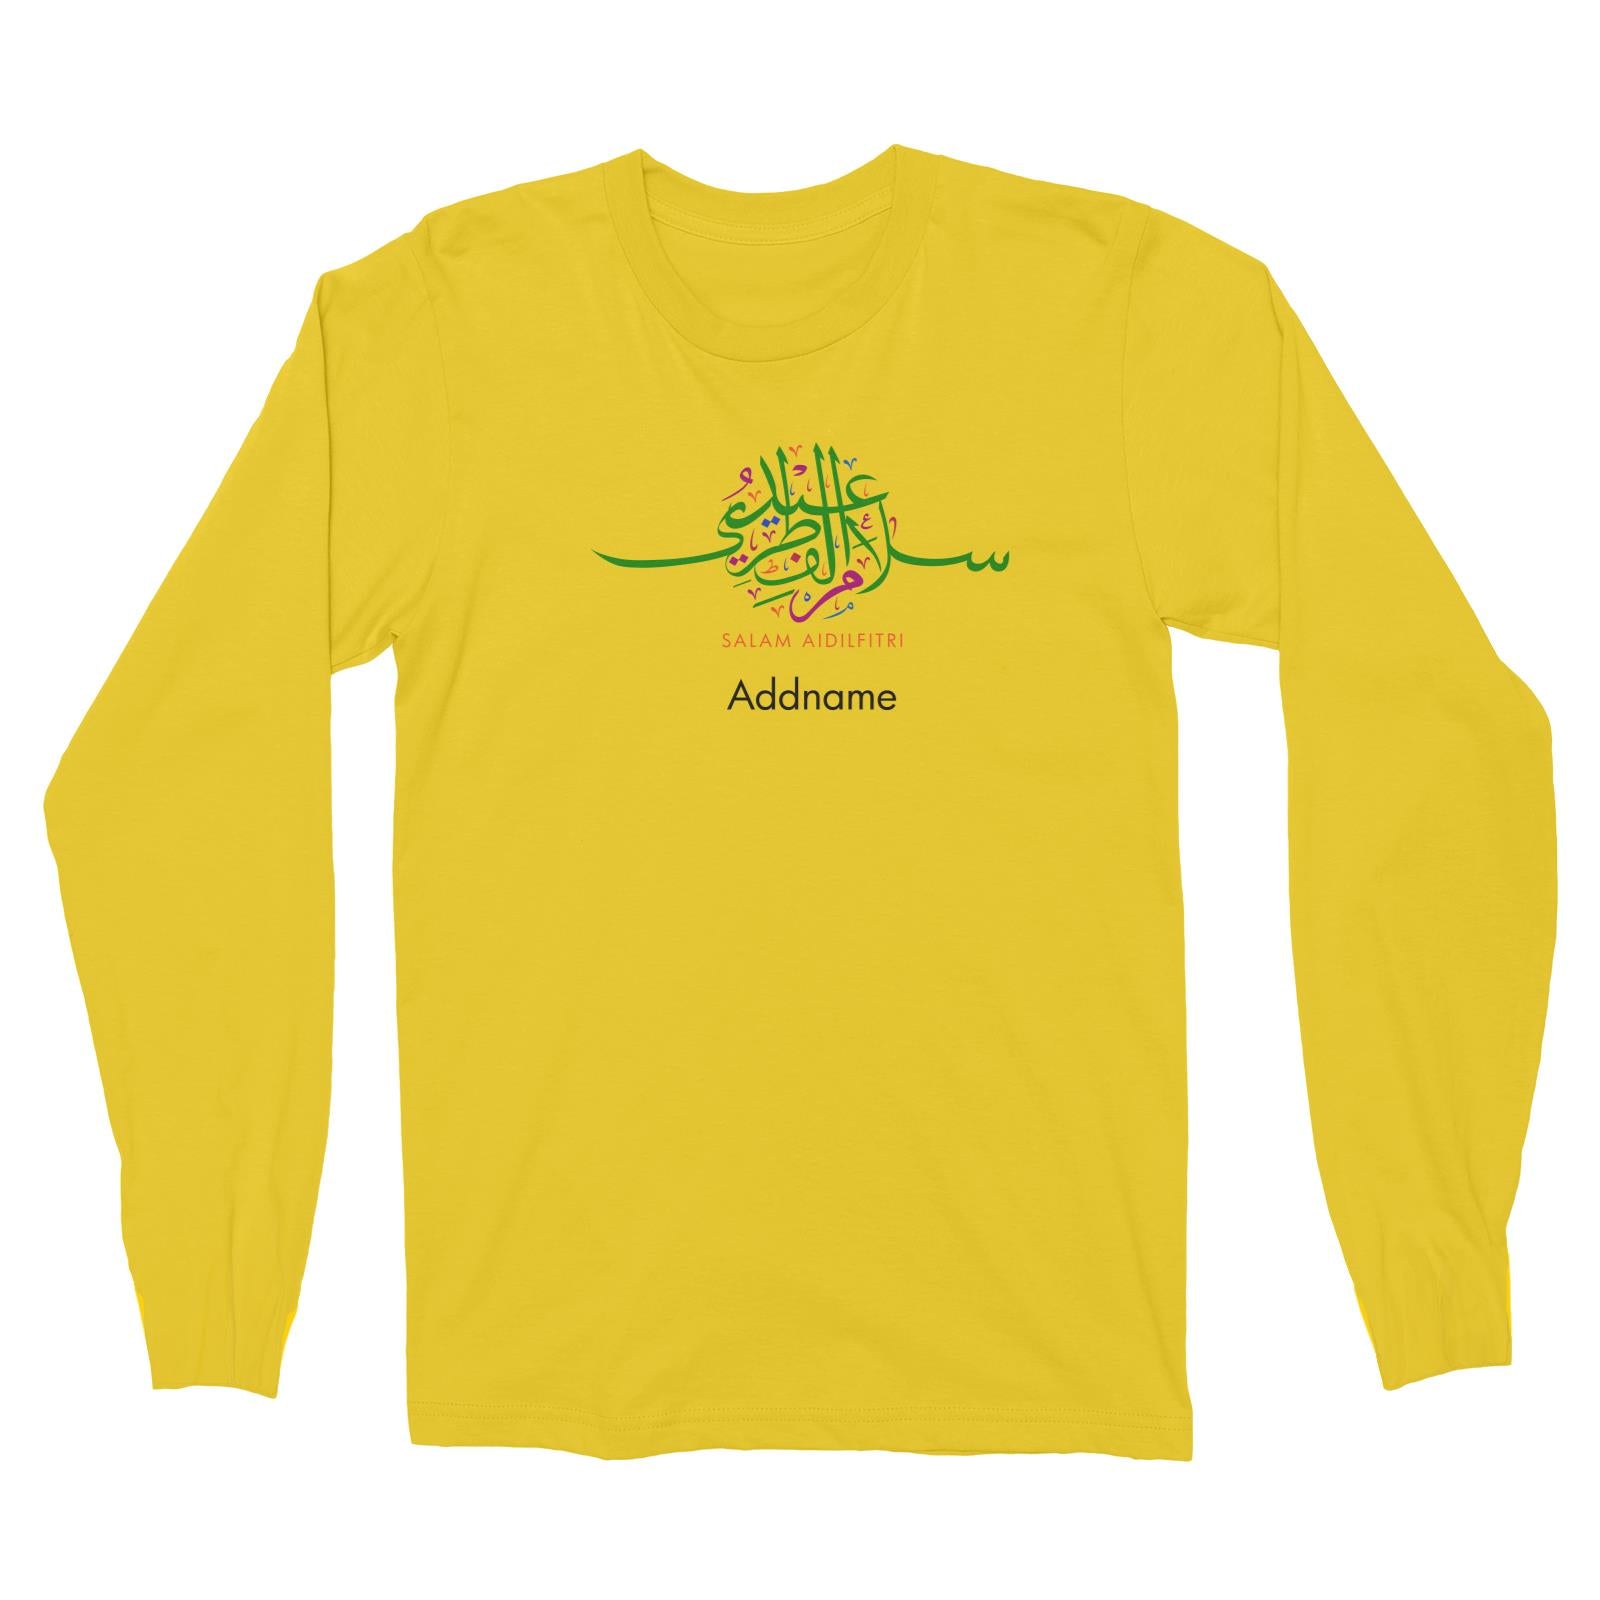 Salam Aidilfitri Colored Jawi Typography T-Shirt